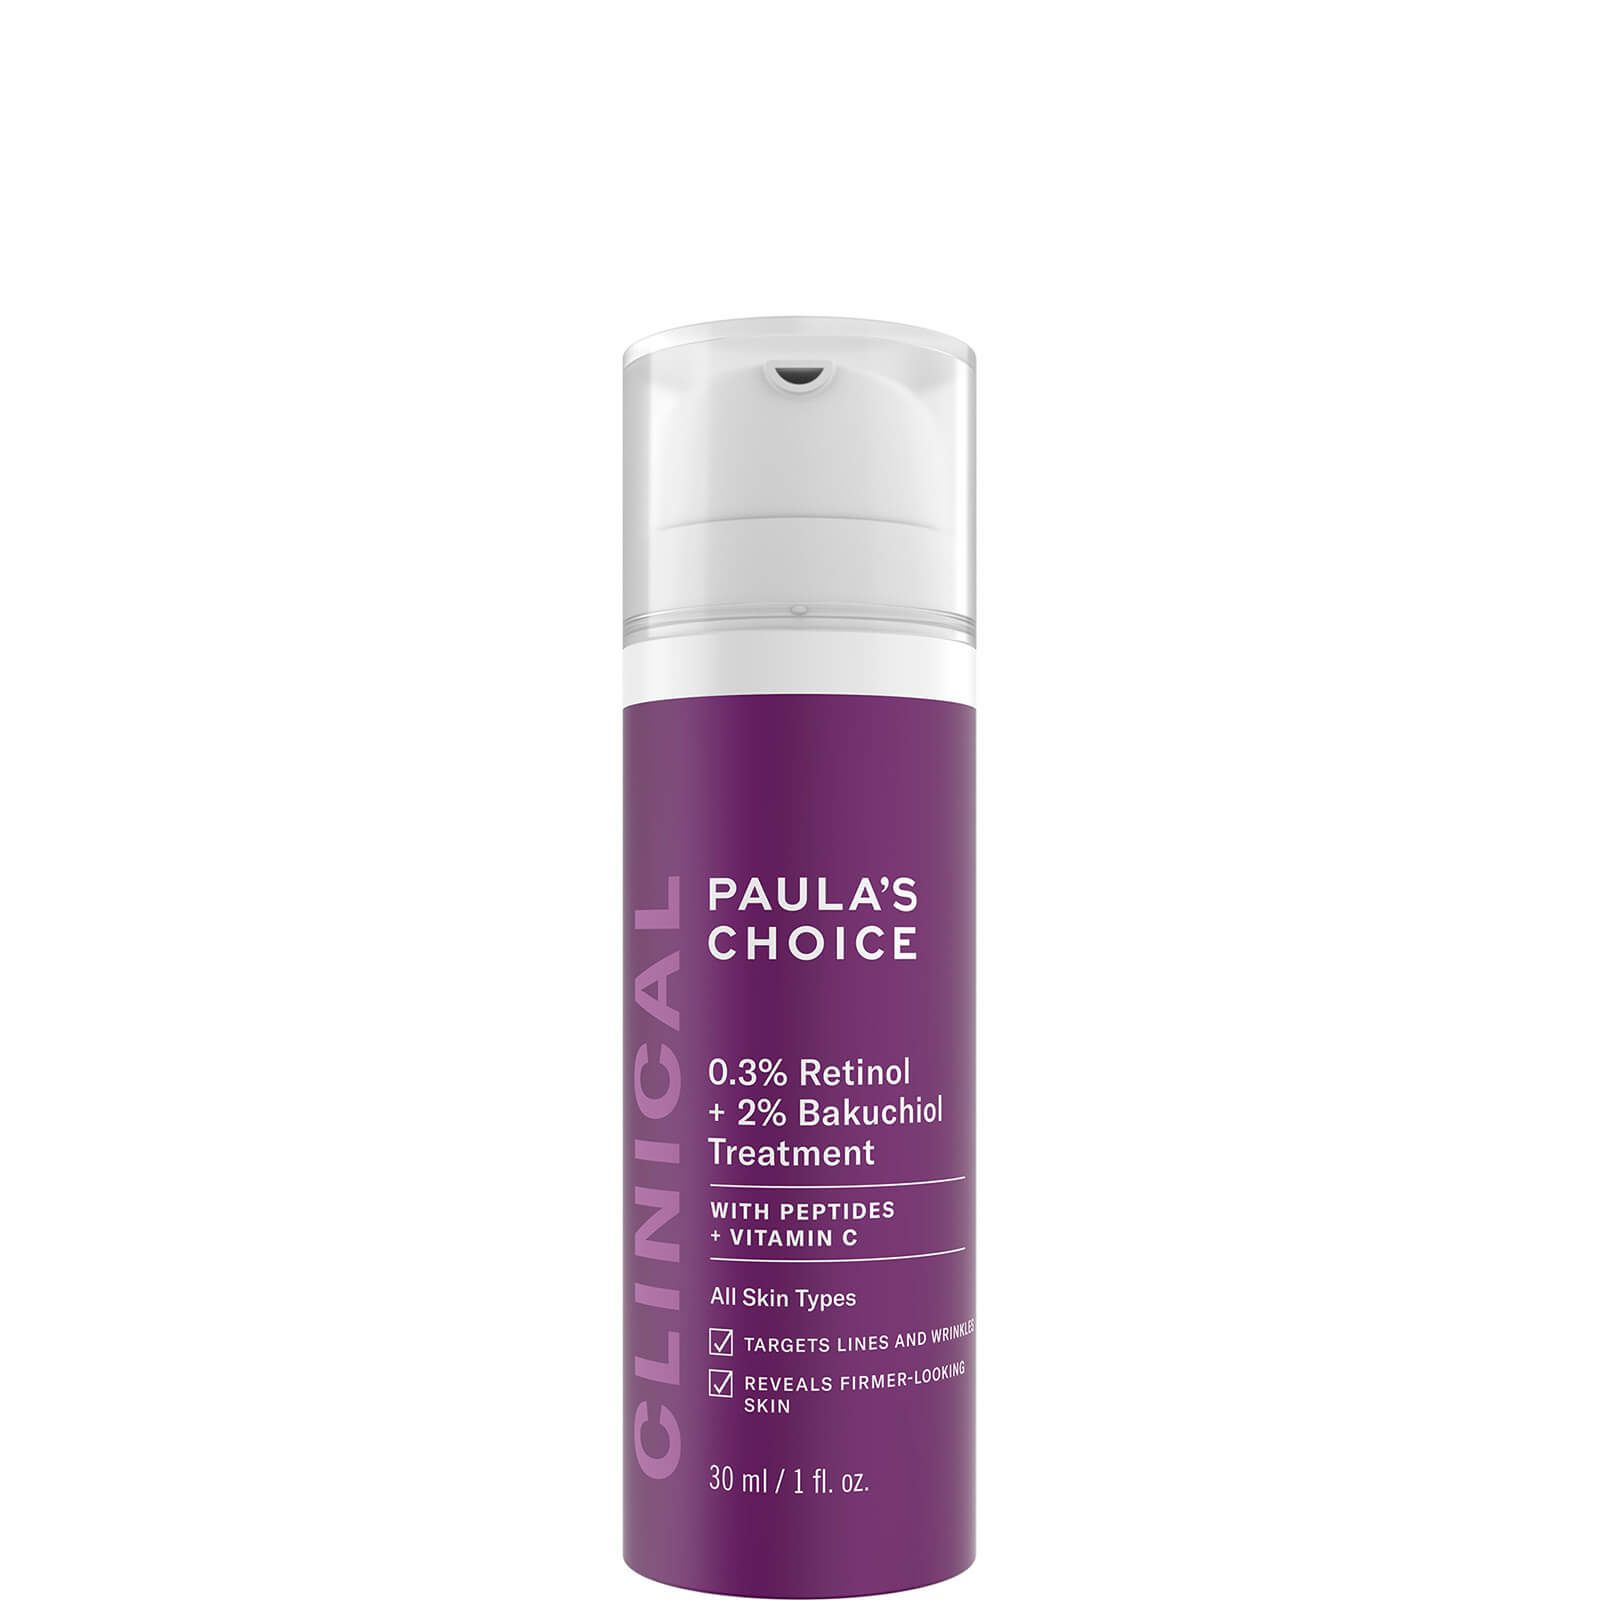 Paula's Choice Clinical 0.3% Retinol and 2% Bakuchiol Treatment 30ml | Cult Beauty (Global)